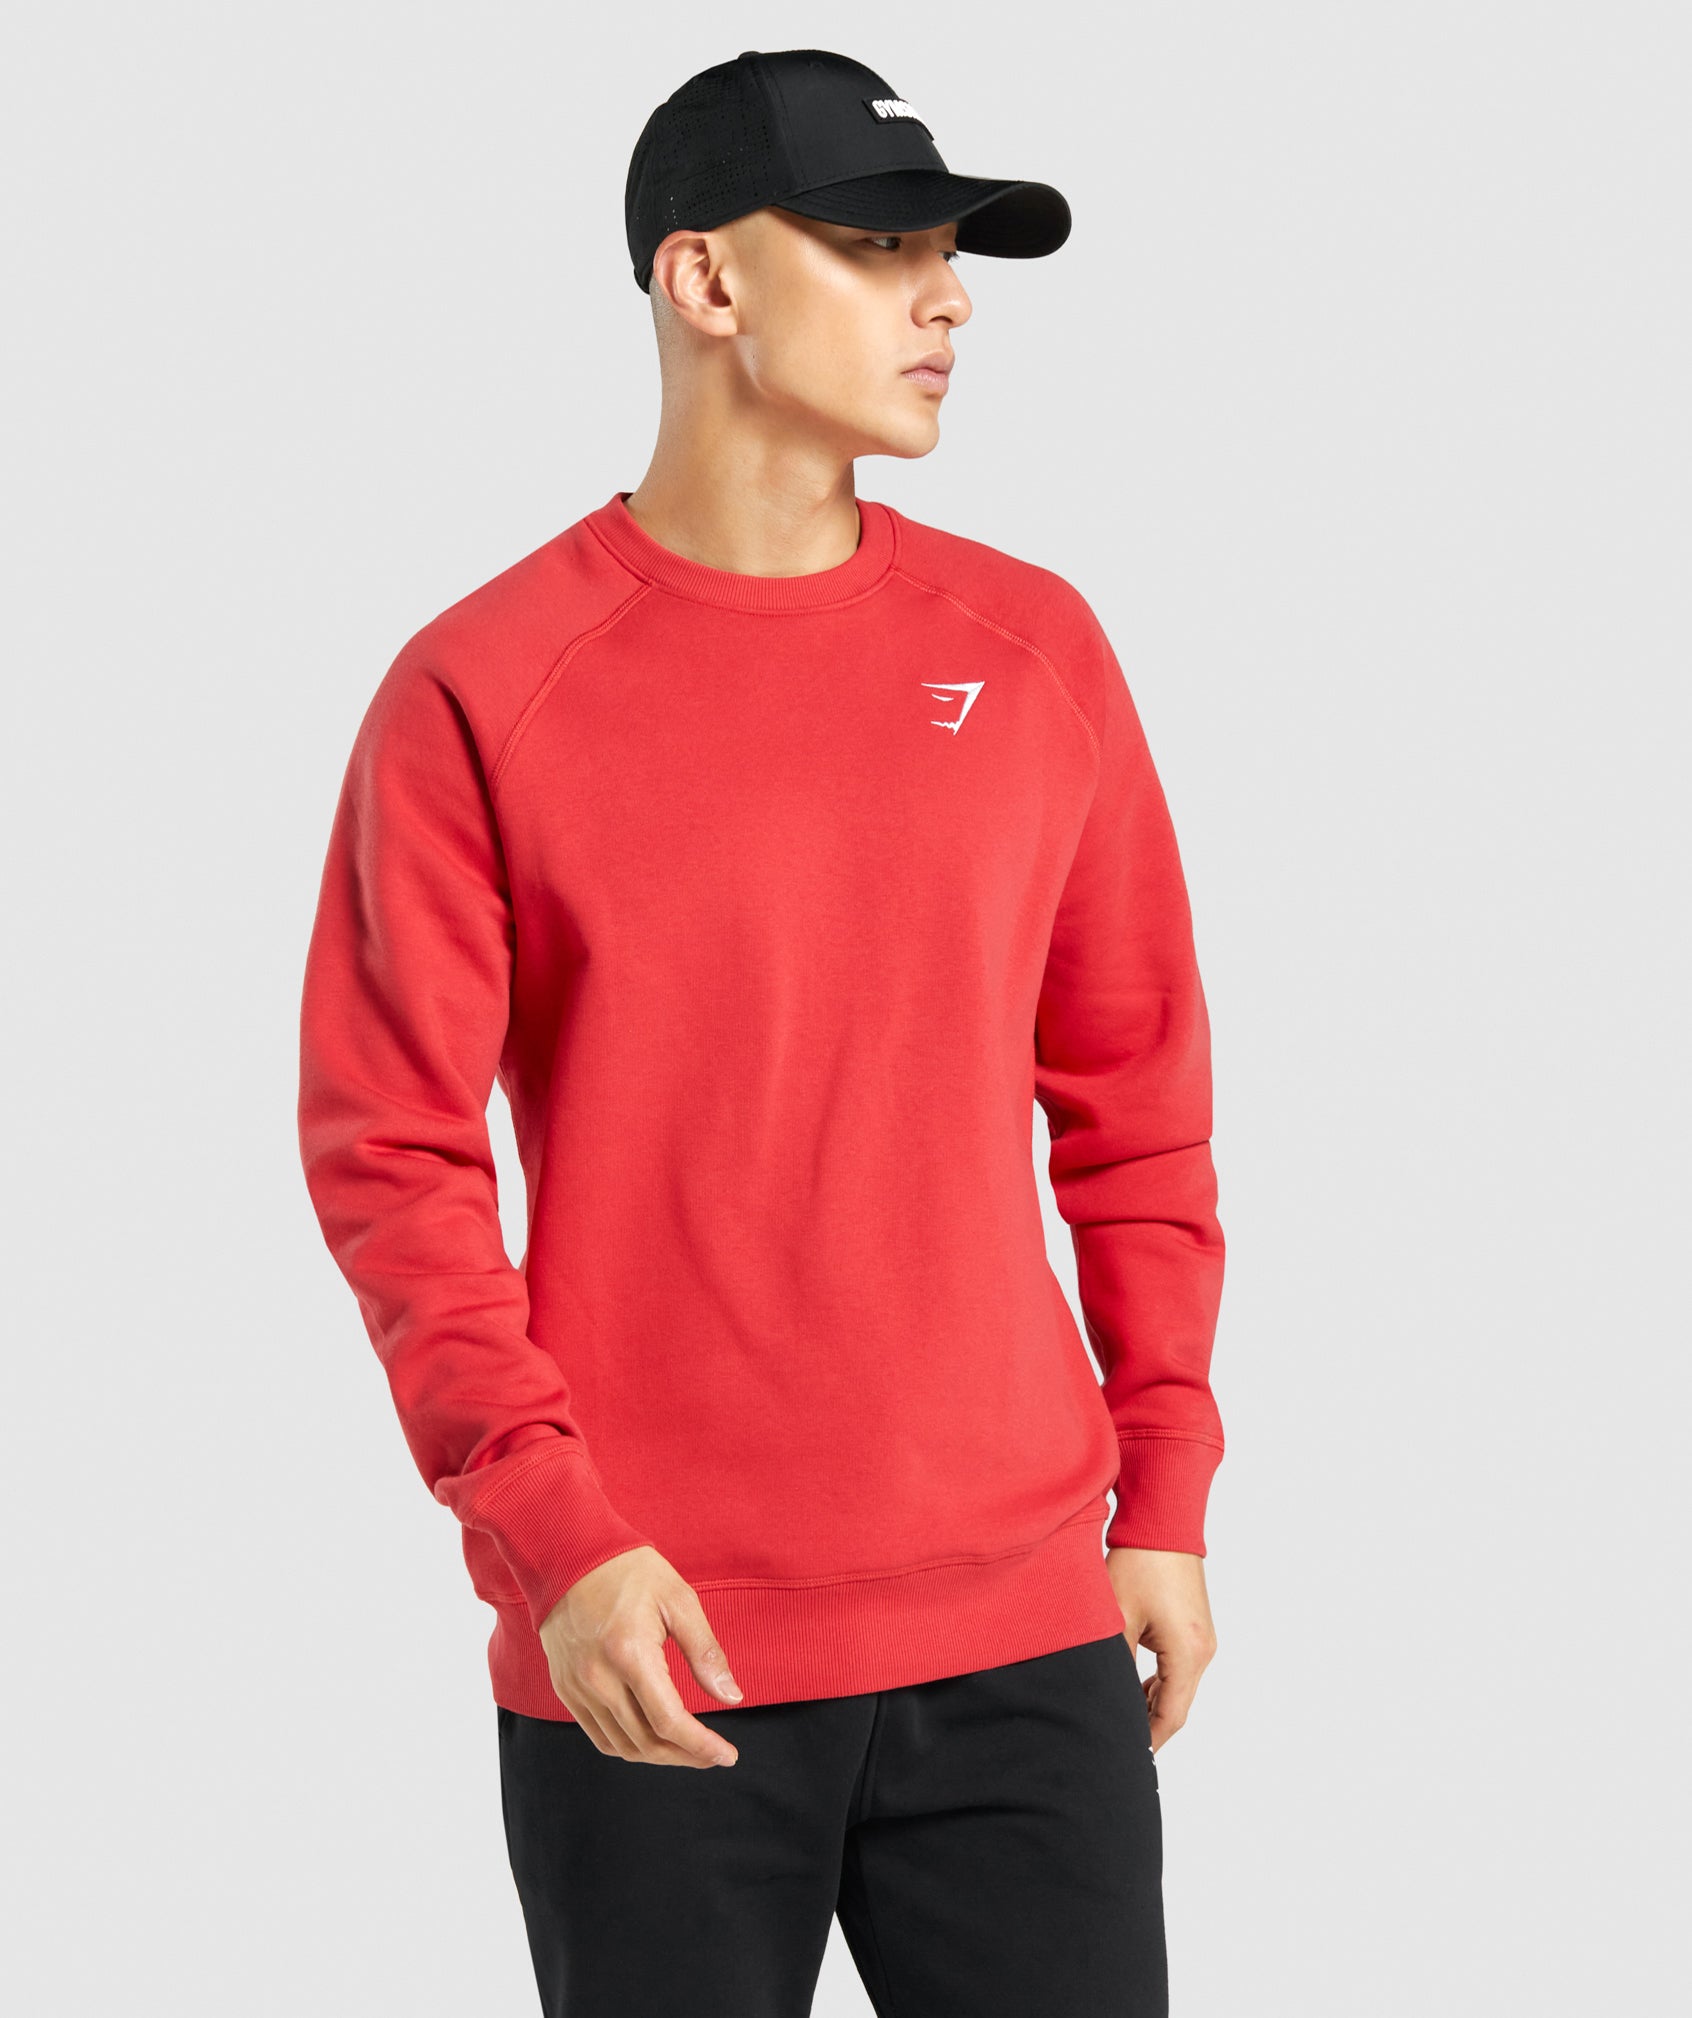 Crest Sweatshirt in Red - view 1